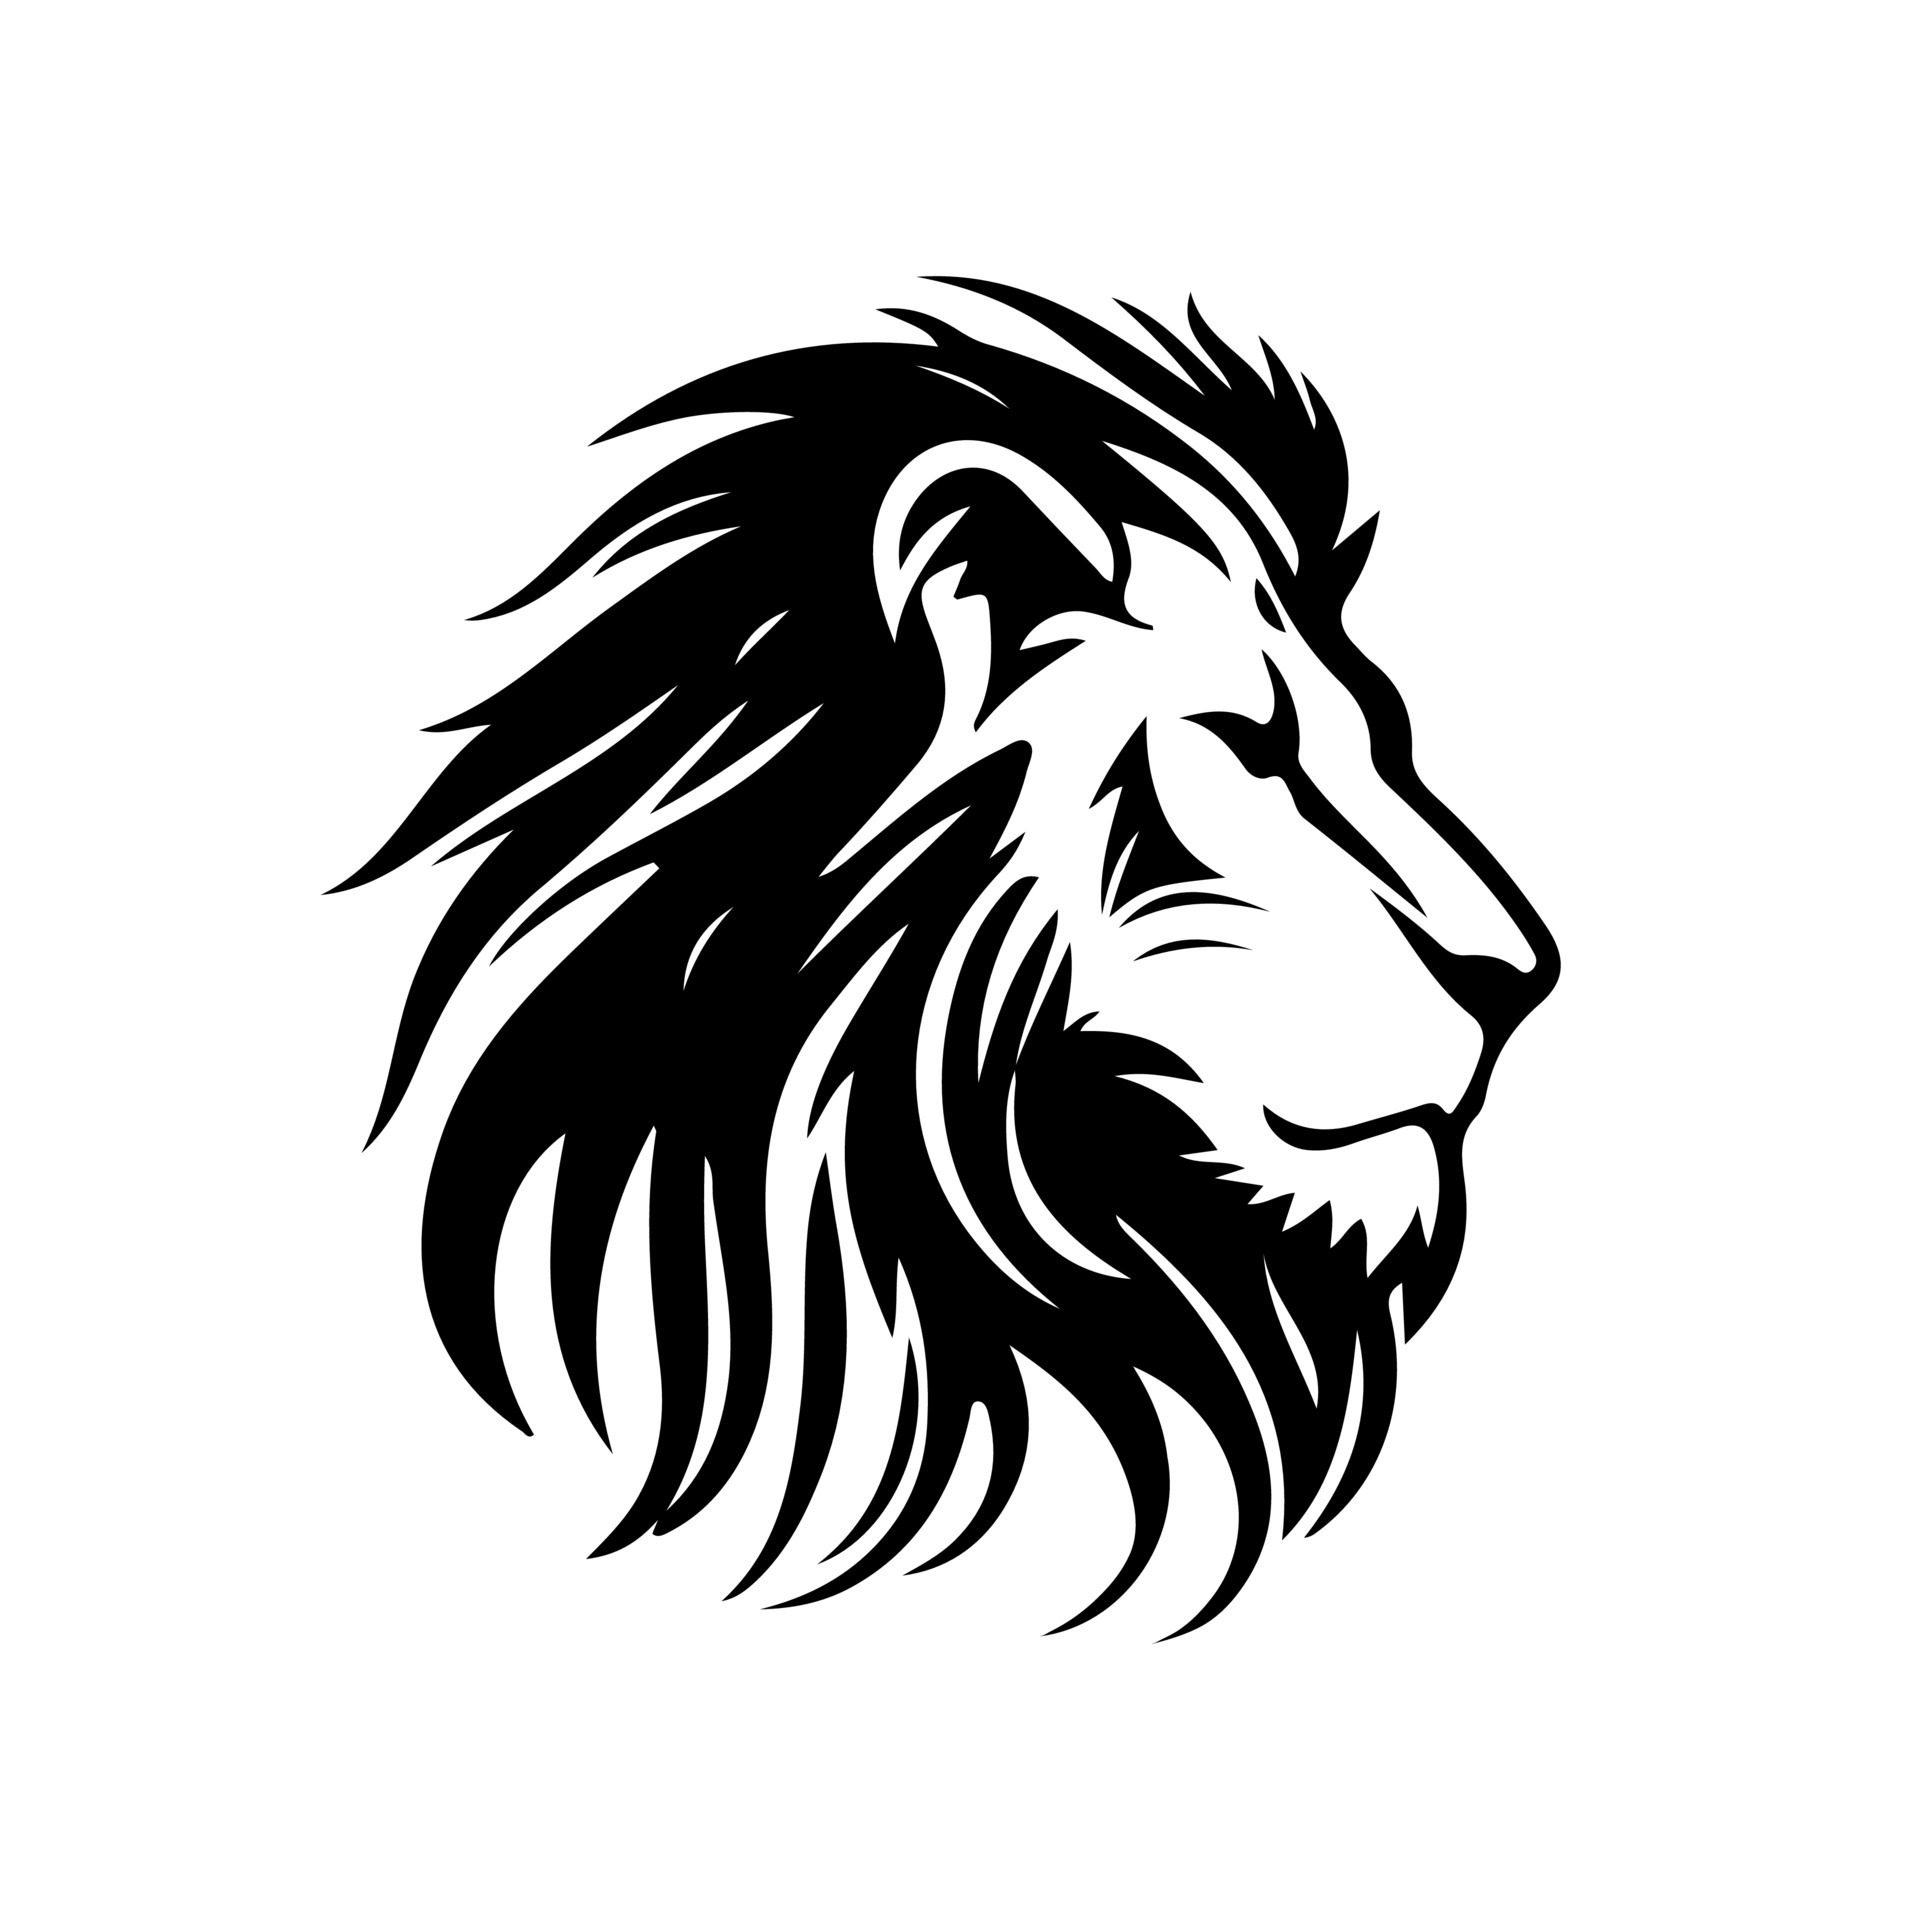 35 Best Lion Tattoos For Men Ideas And Designs 2023  FashionBeans